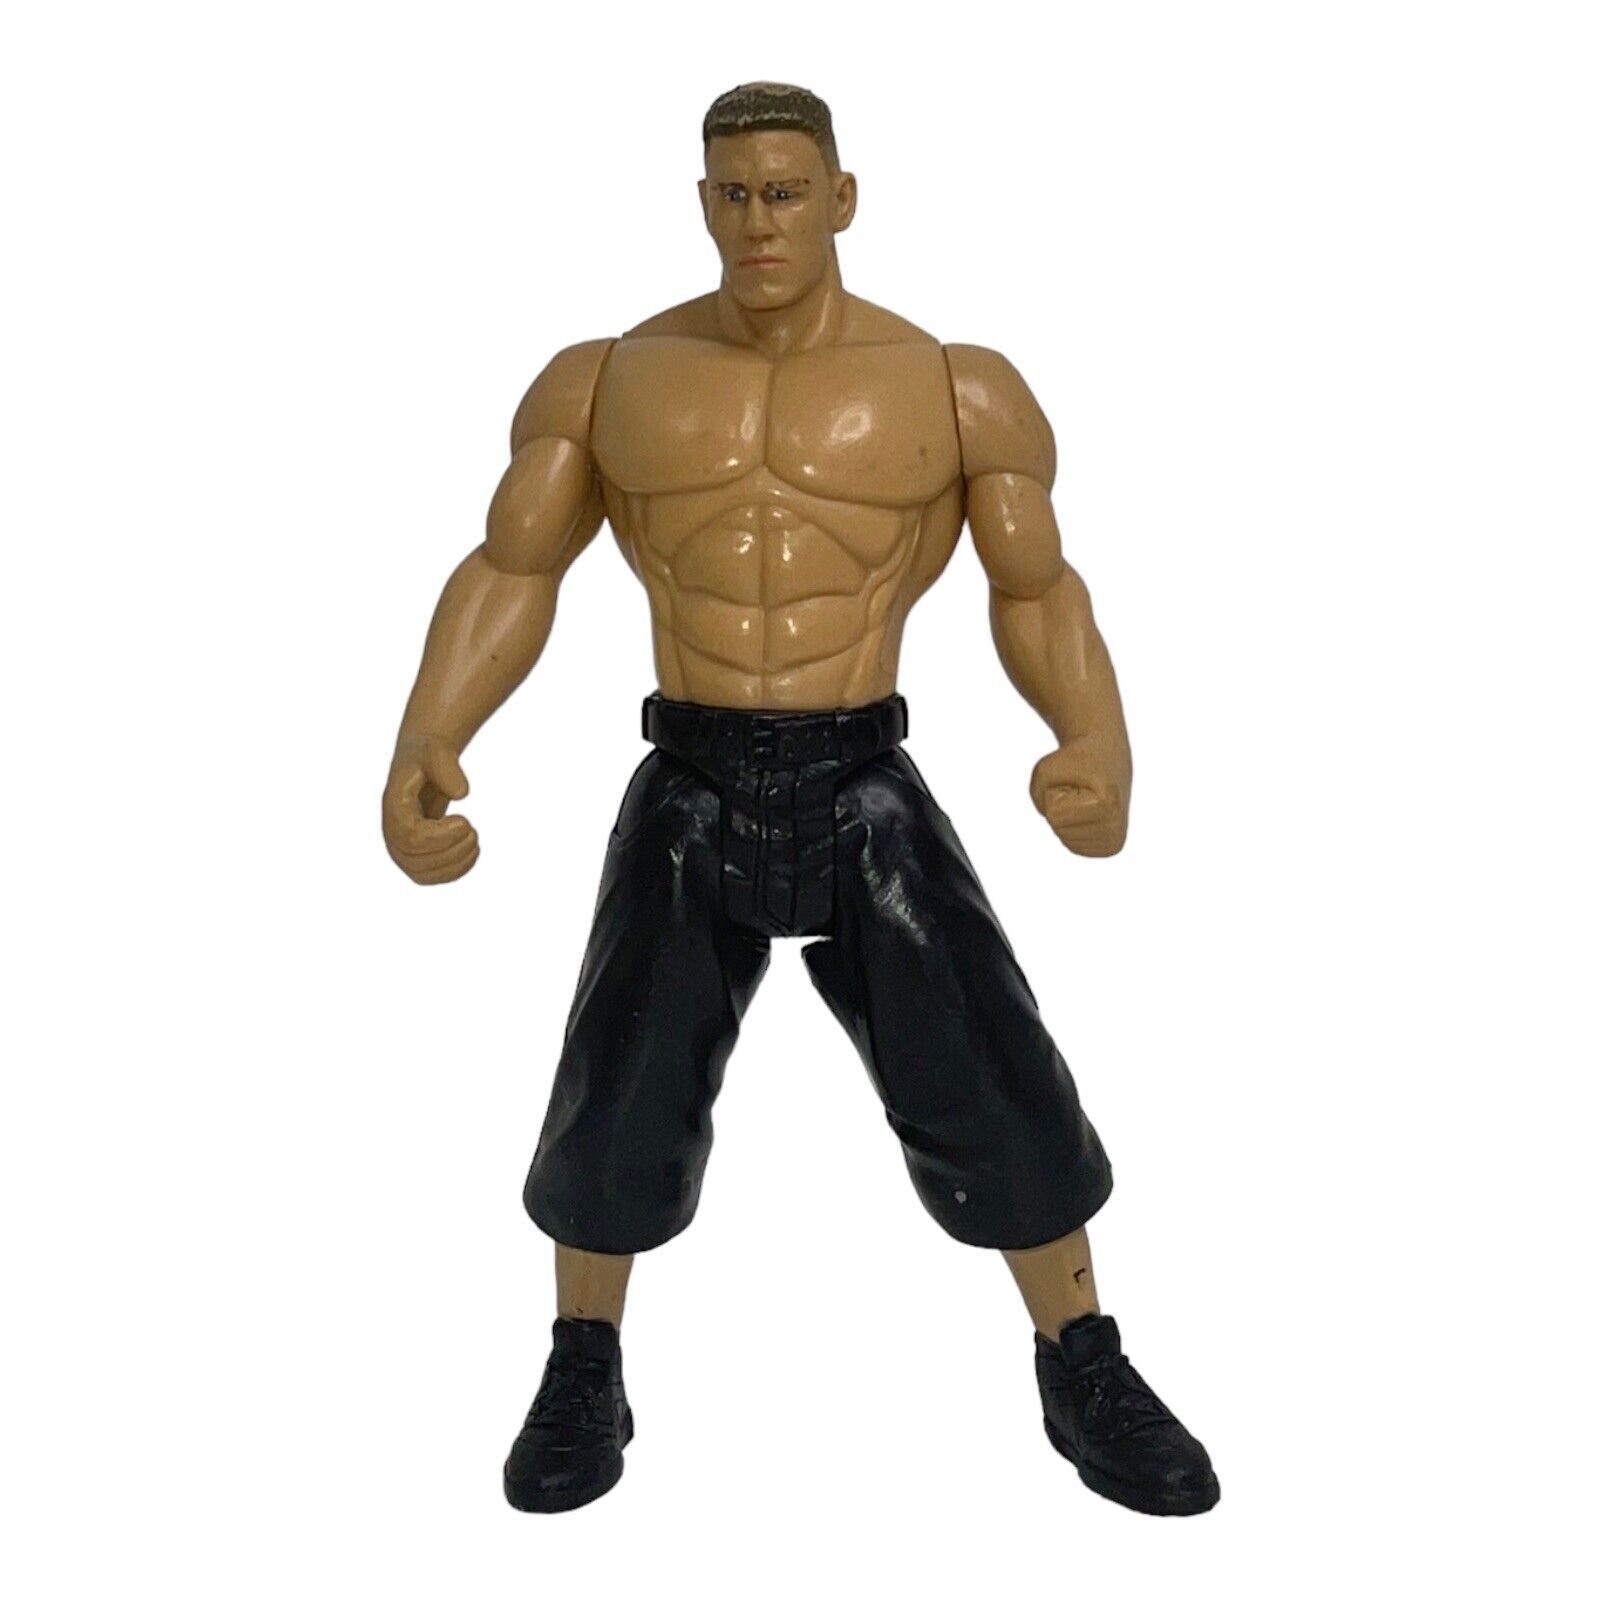 Primary image for 2005 Jakks Pacific John Cena WWE Wrestling Figure